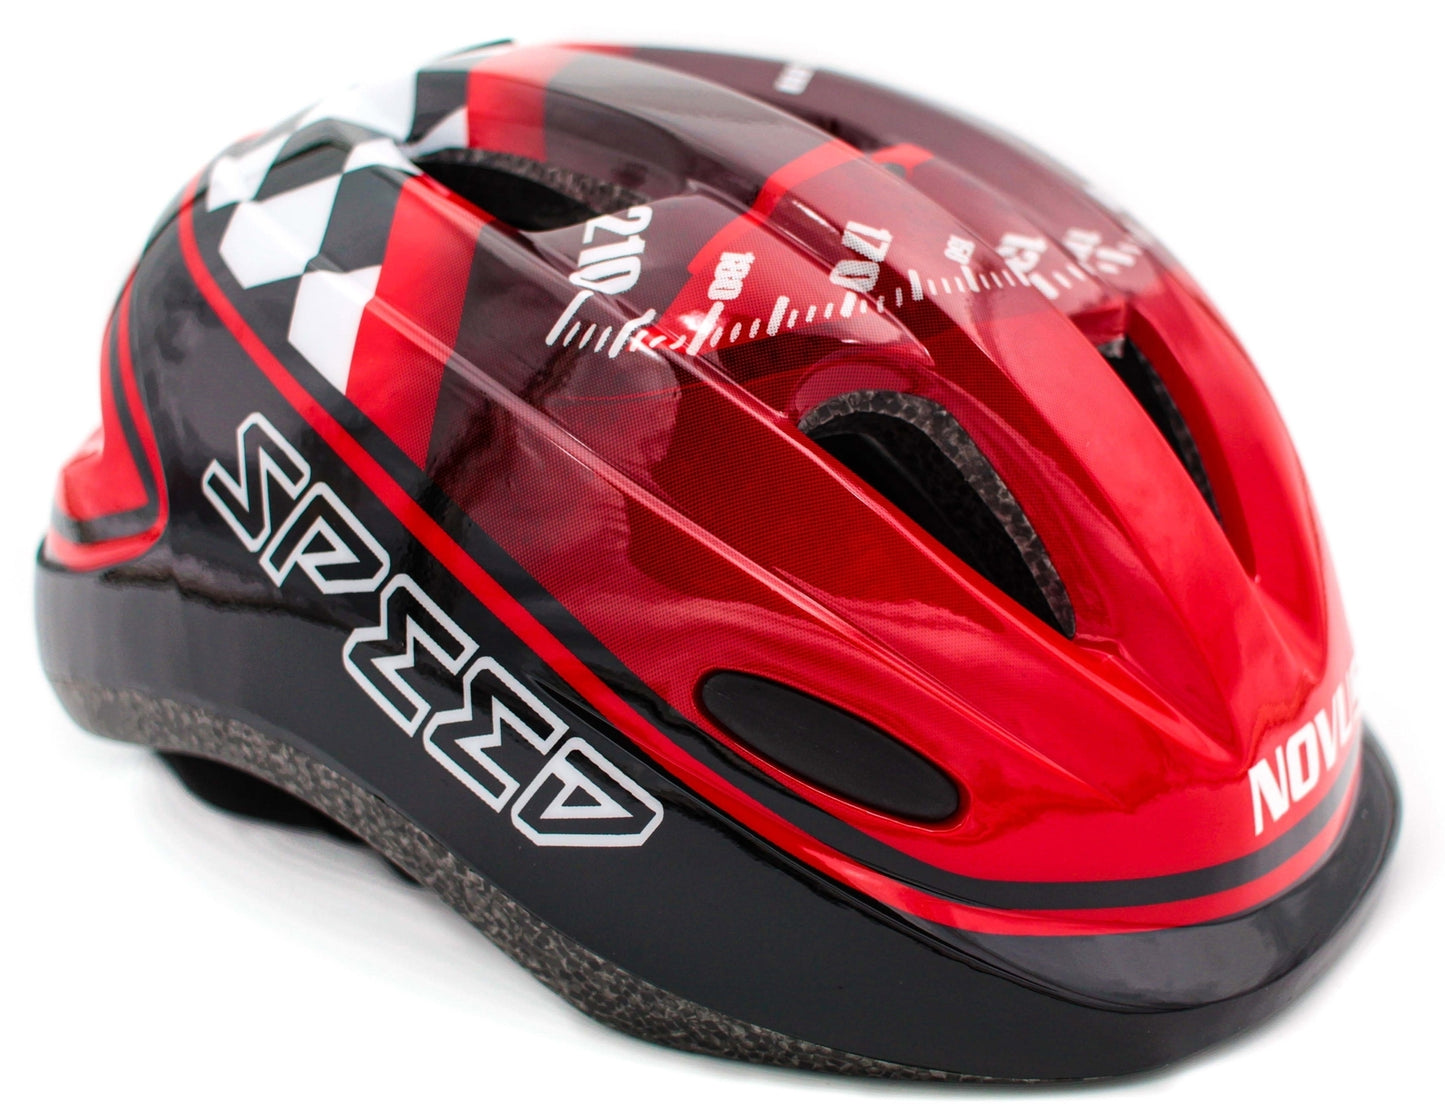 Children's helmet racer red